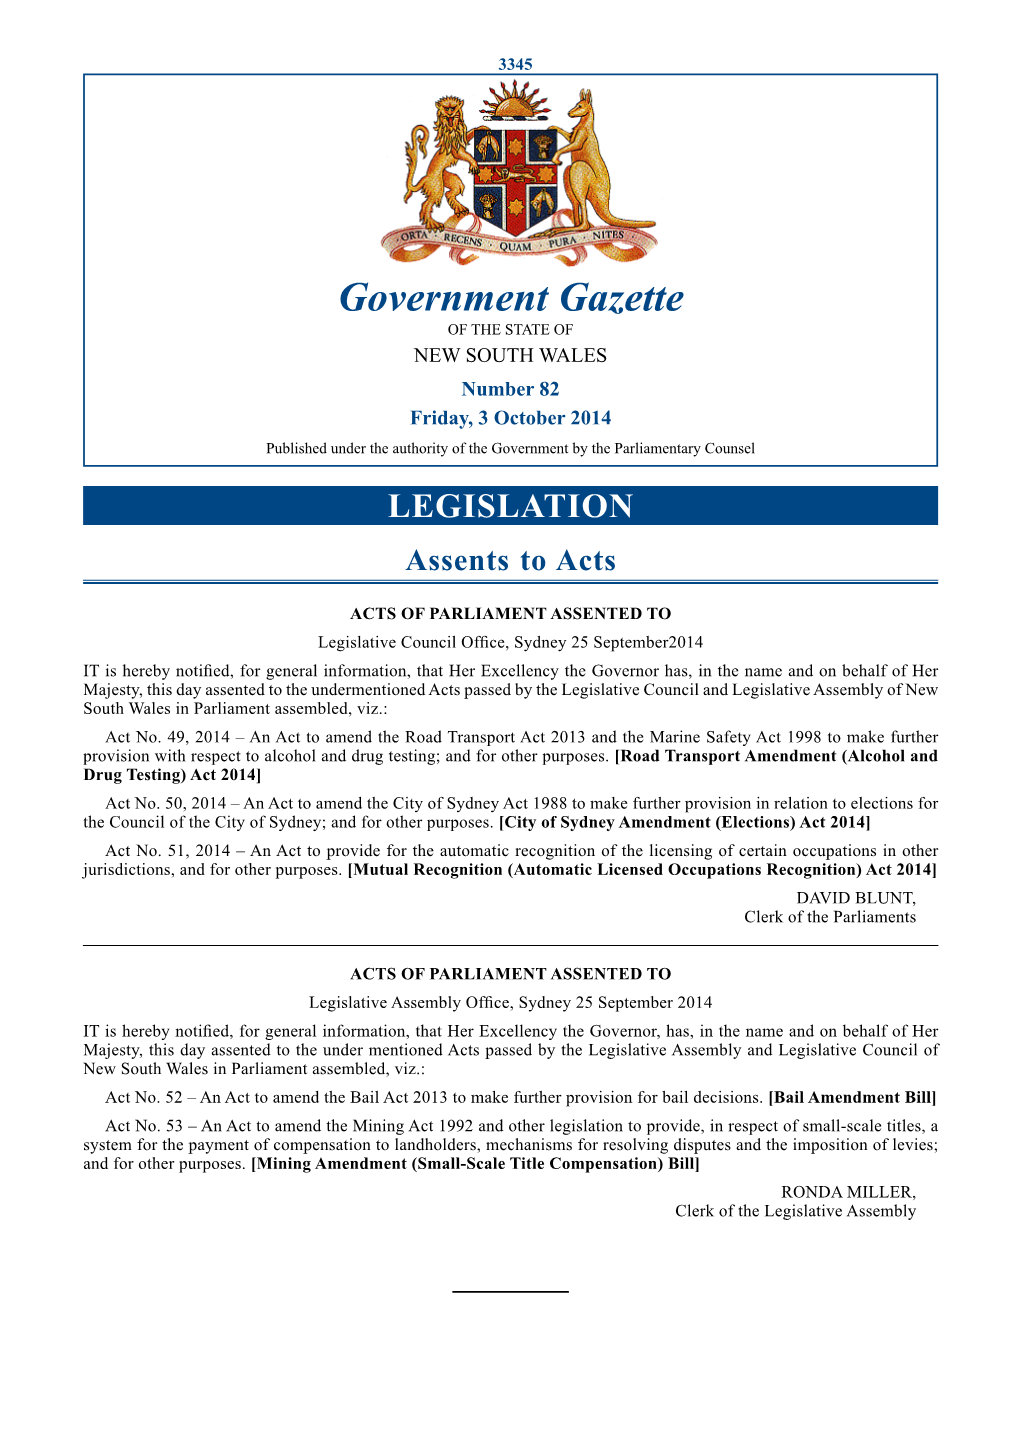 Government Gazette of 3 October 2014